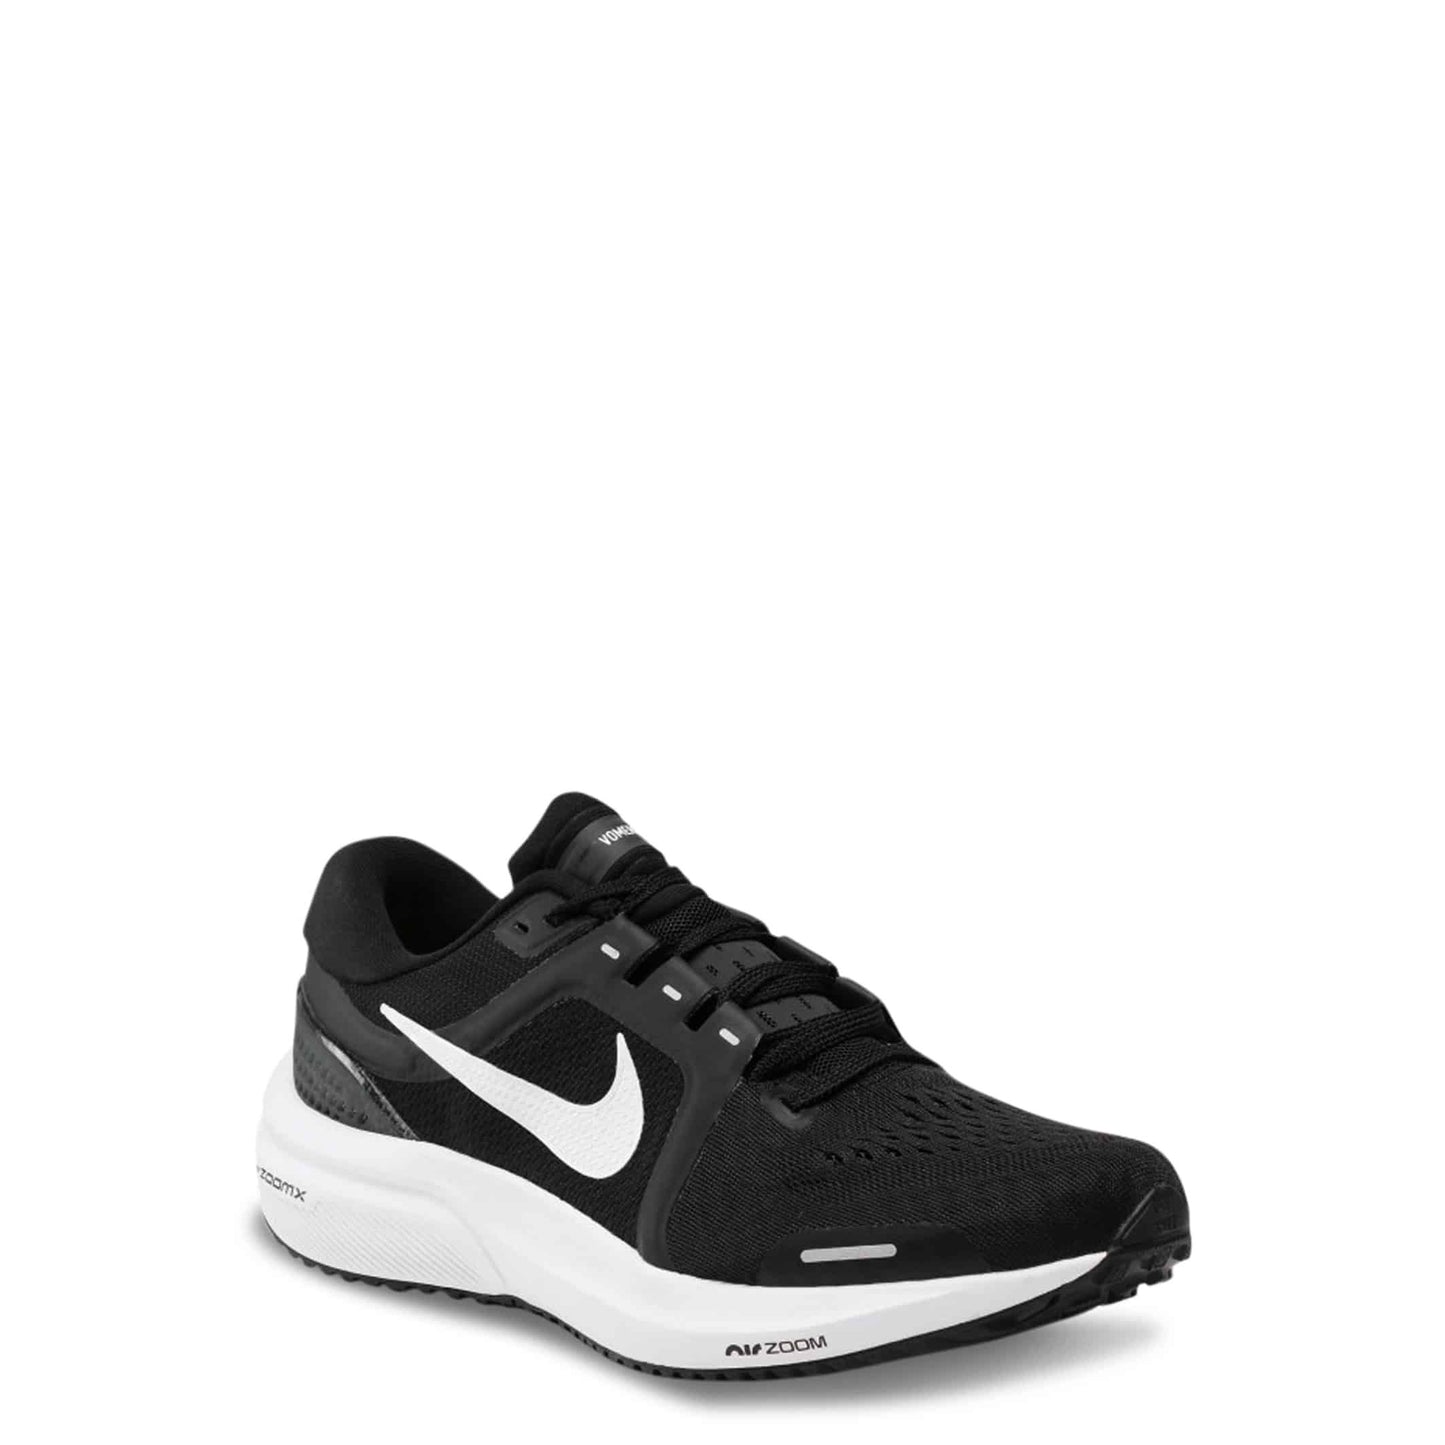 Nike Sneakers For Men AirZoomVomero16-DA7245